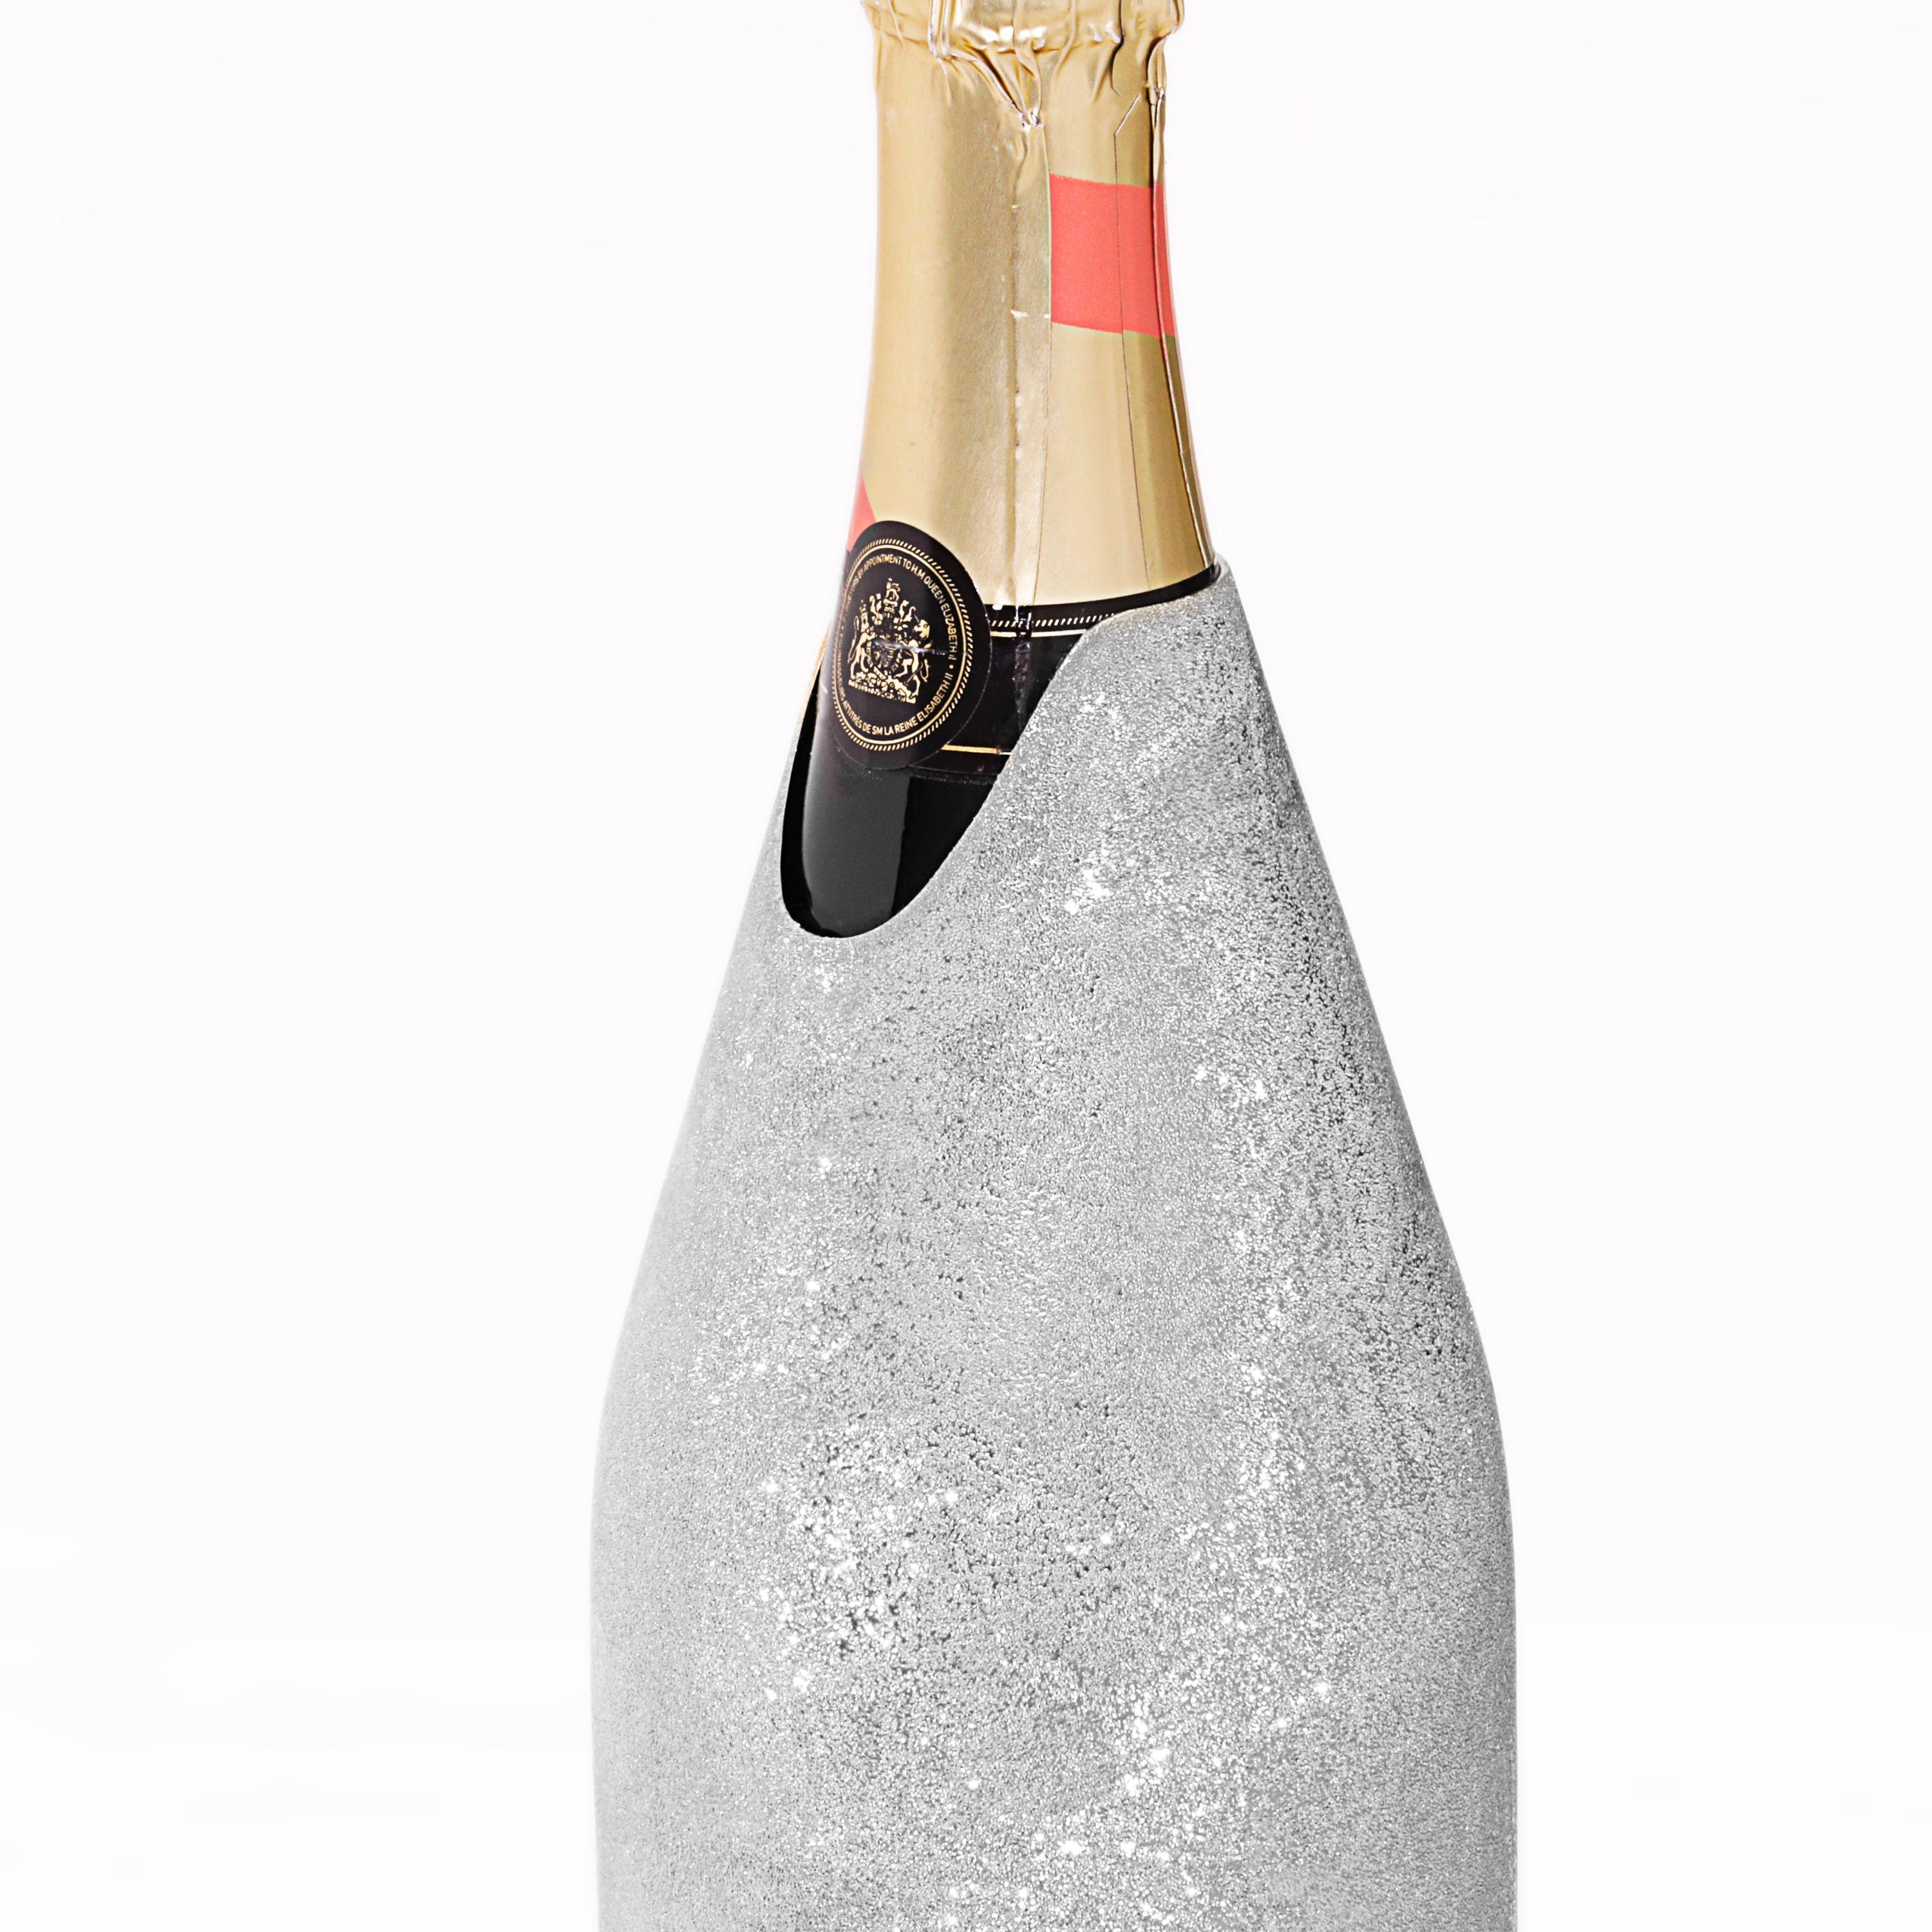 Italian K-OVER Champagne, MOON, argento 999/°°, Italia en vente